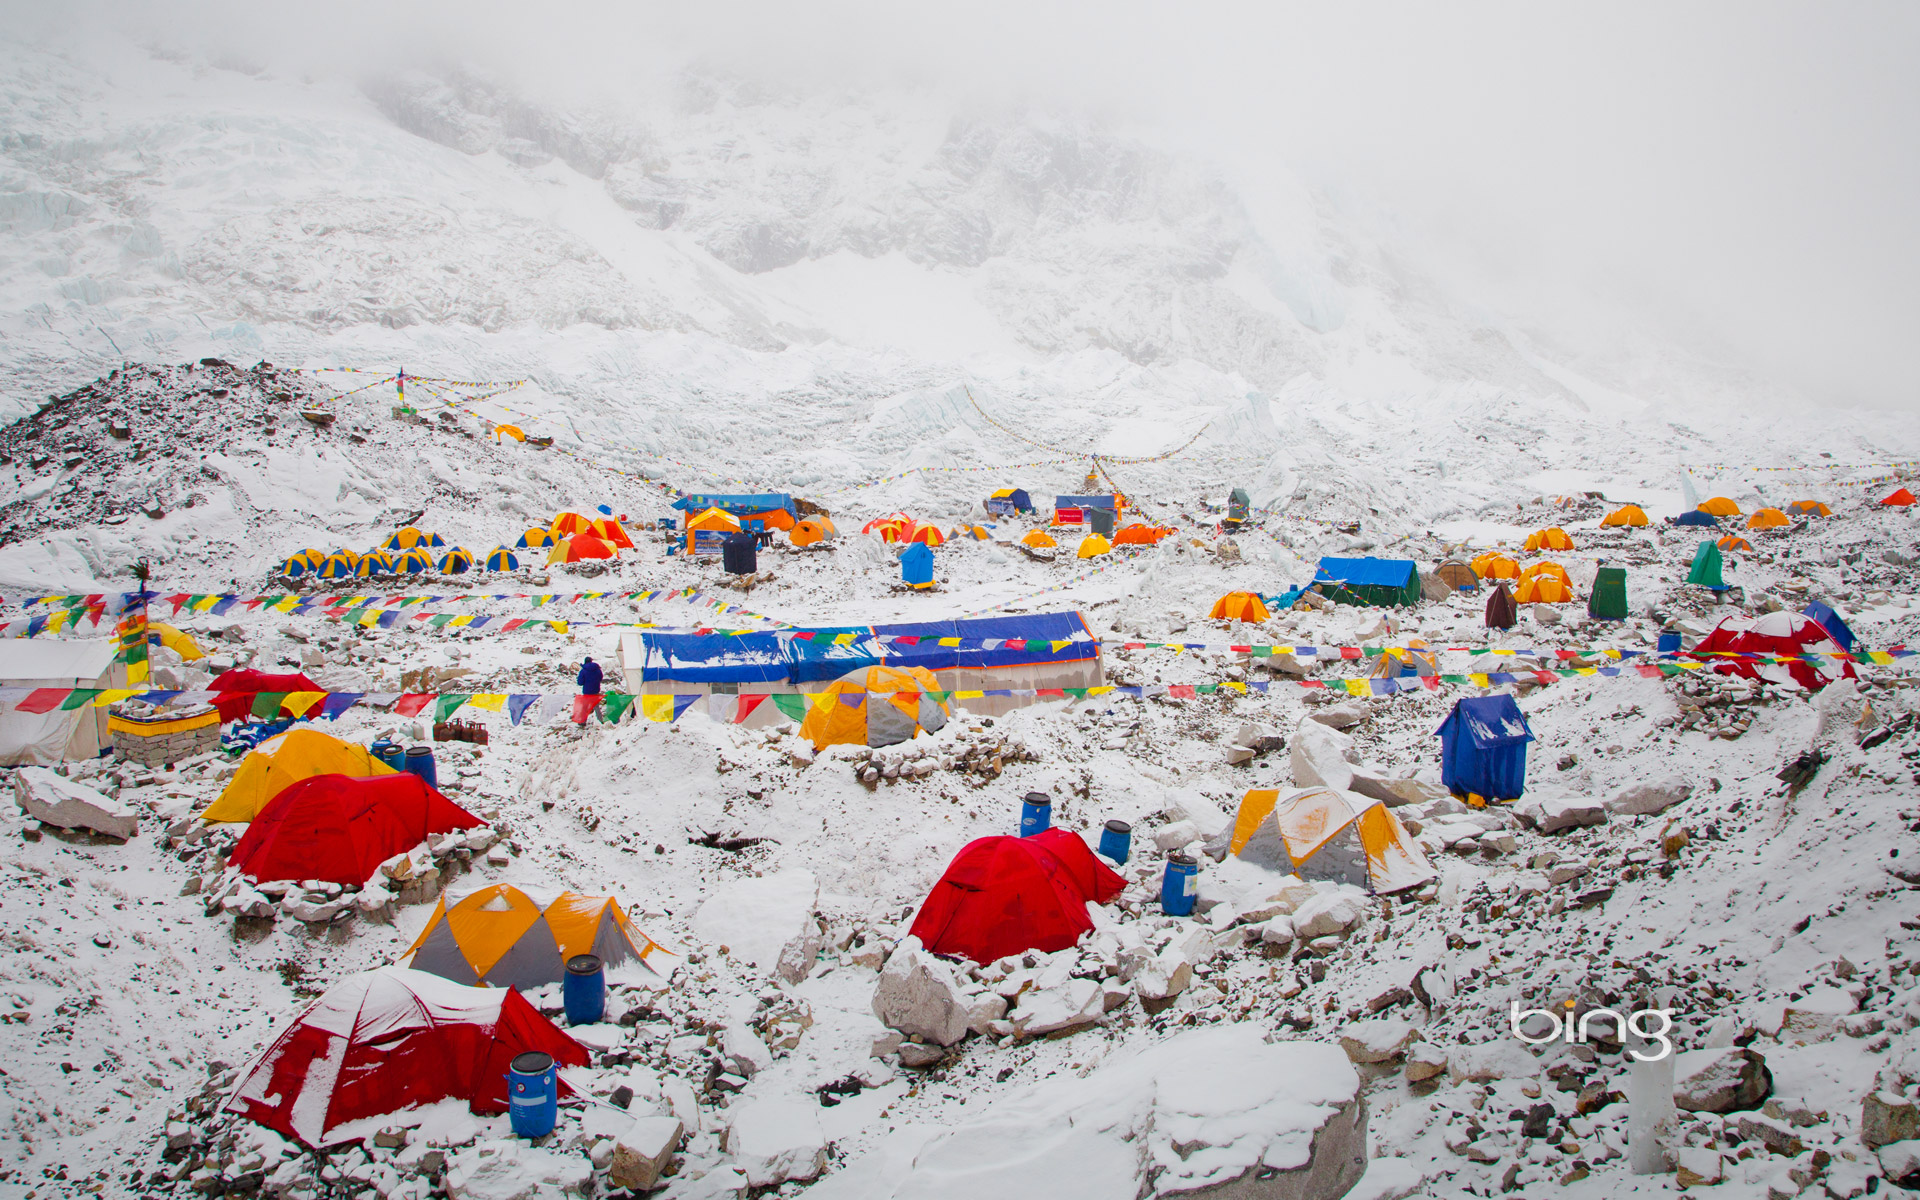 The Mount Everest BaseCamp at Khumbu, Nepal